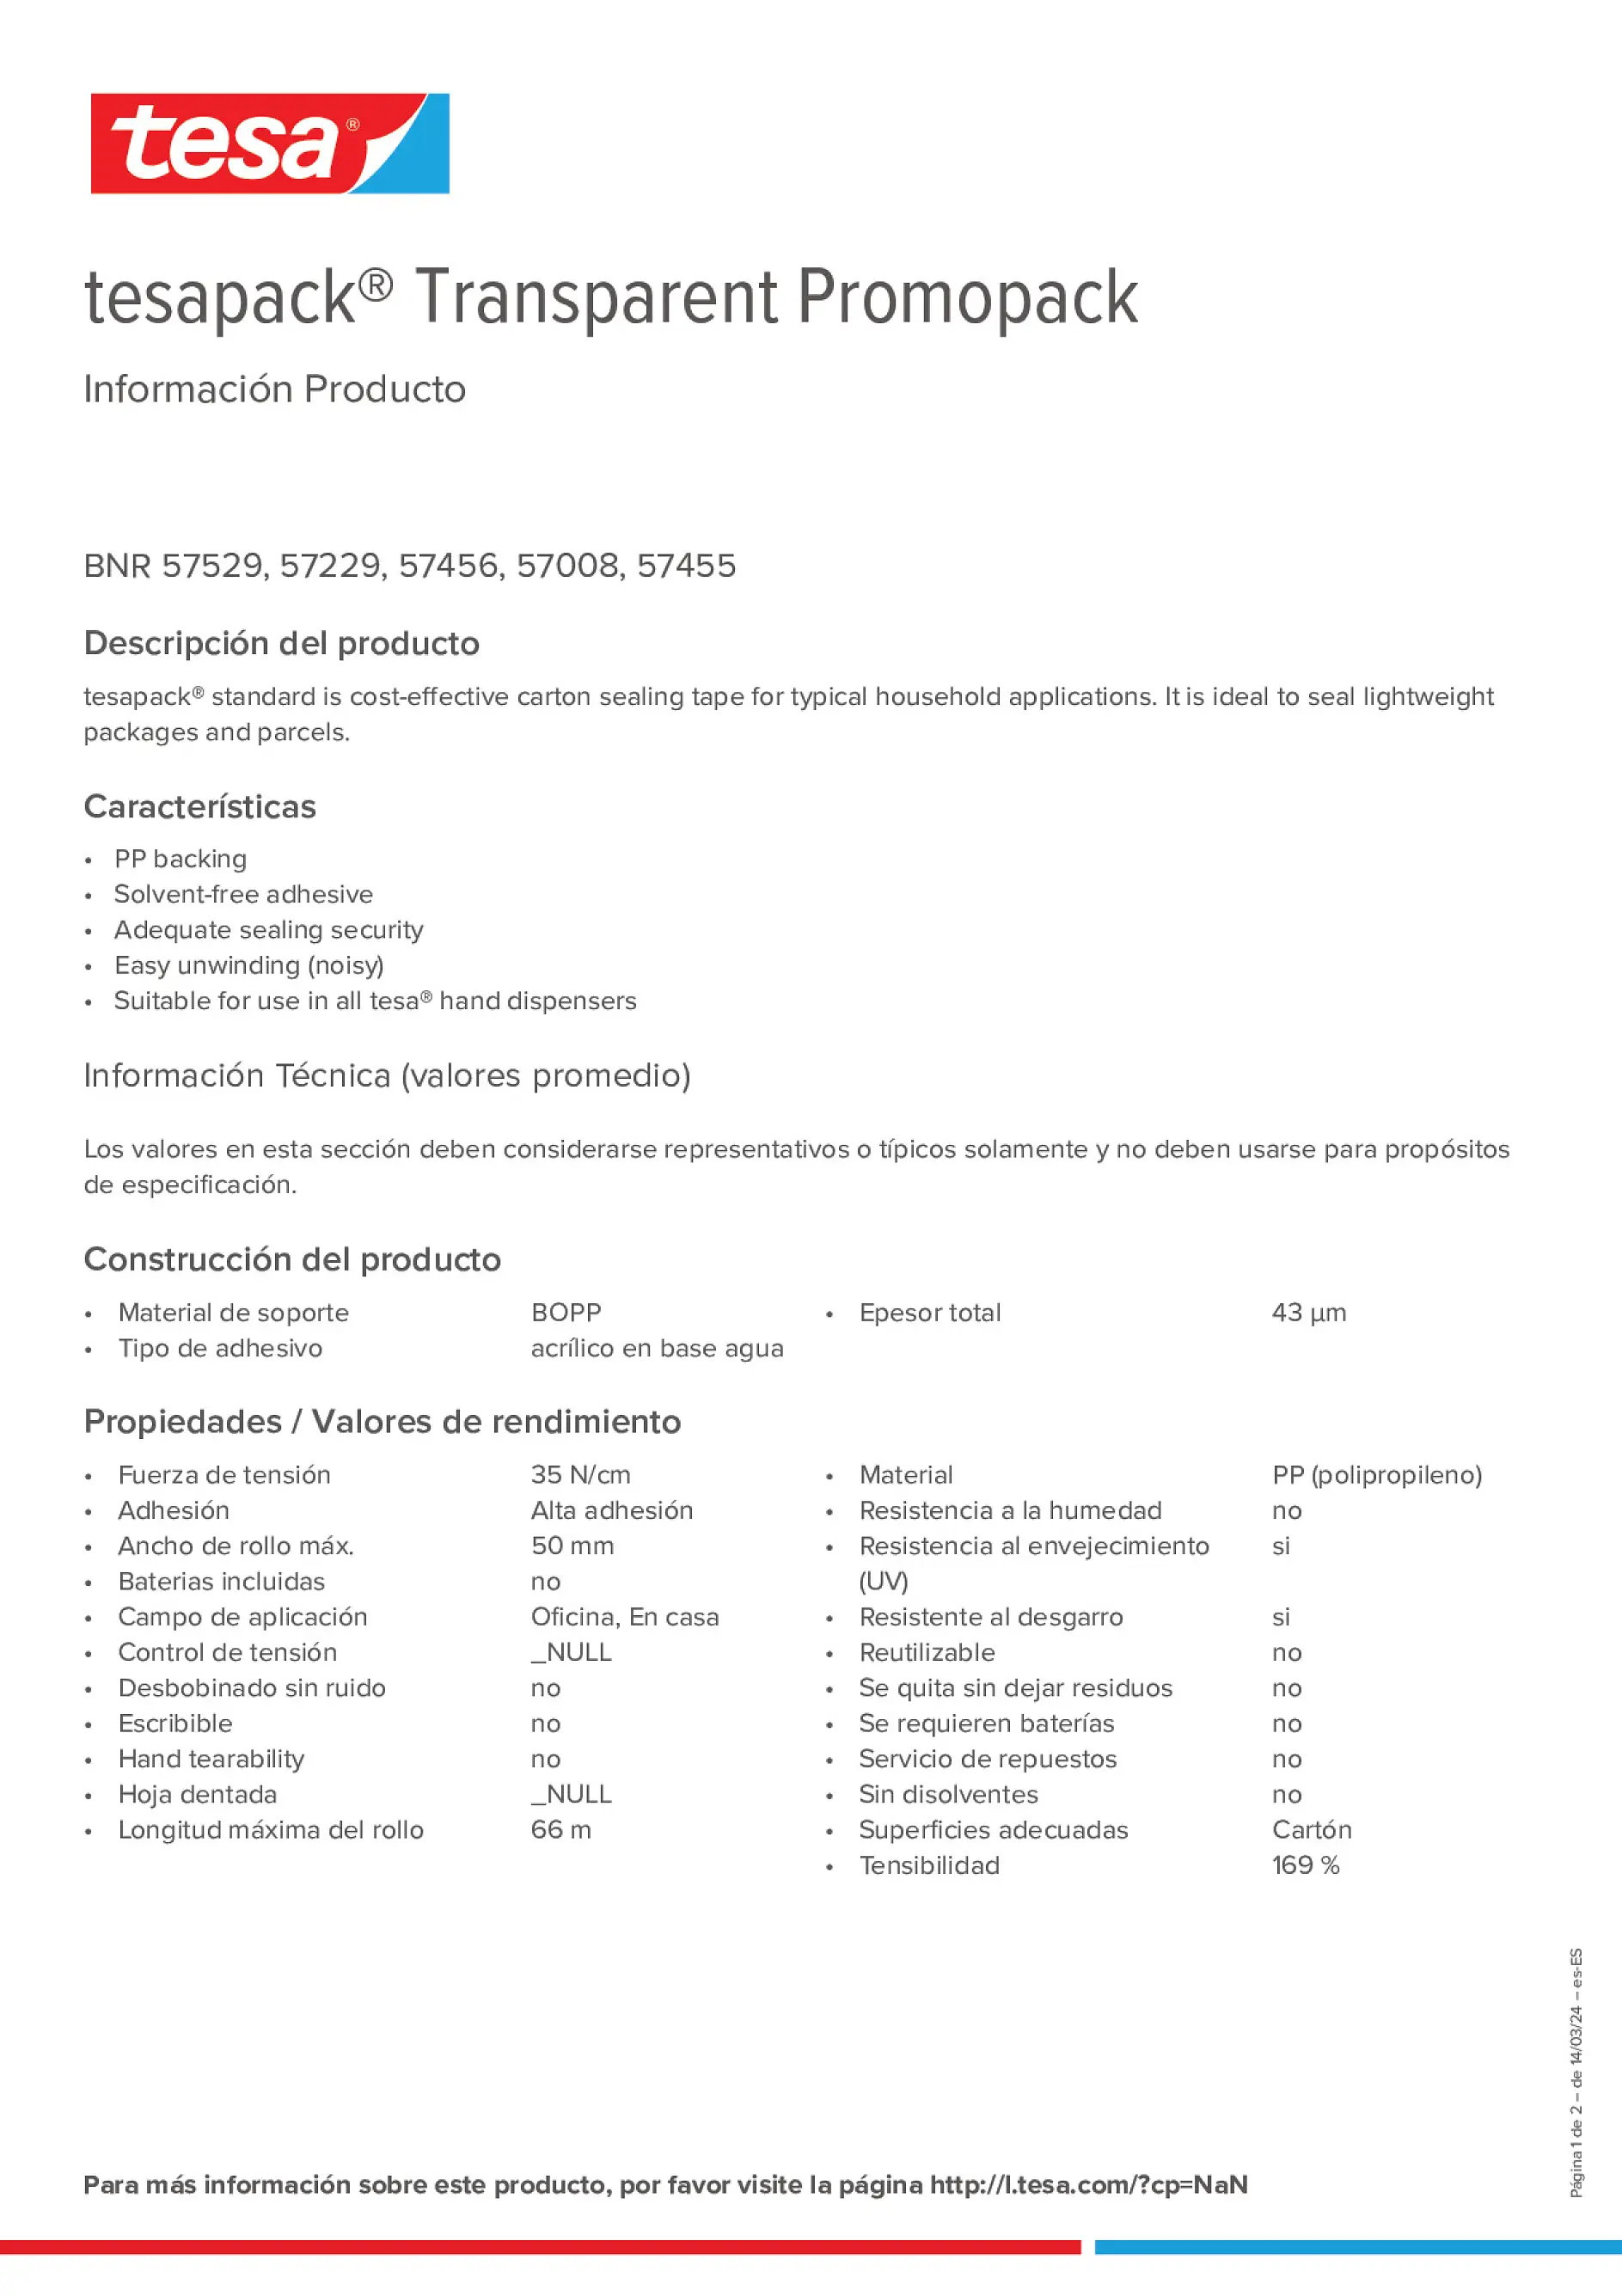 Product information_tesapack® 57456_es-ES